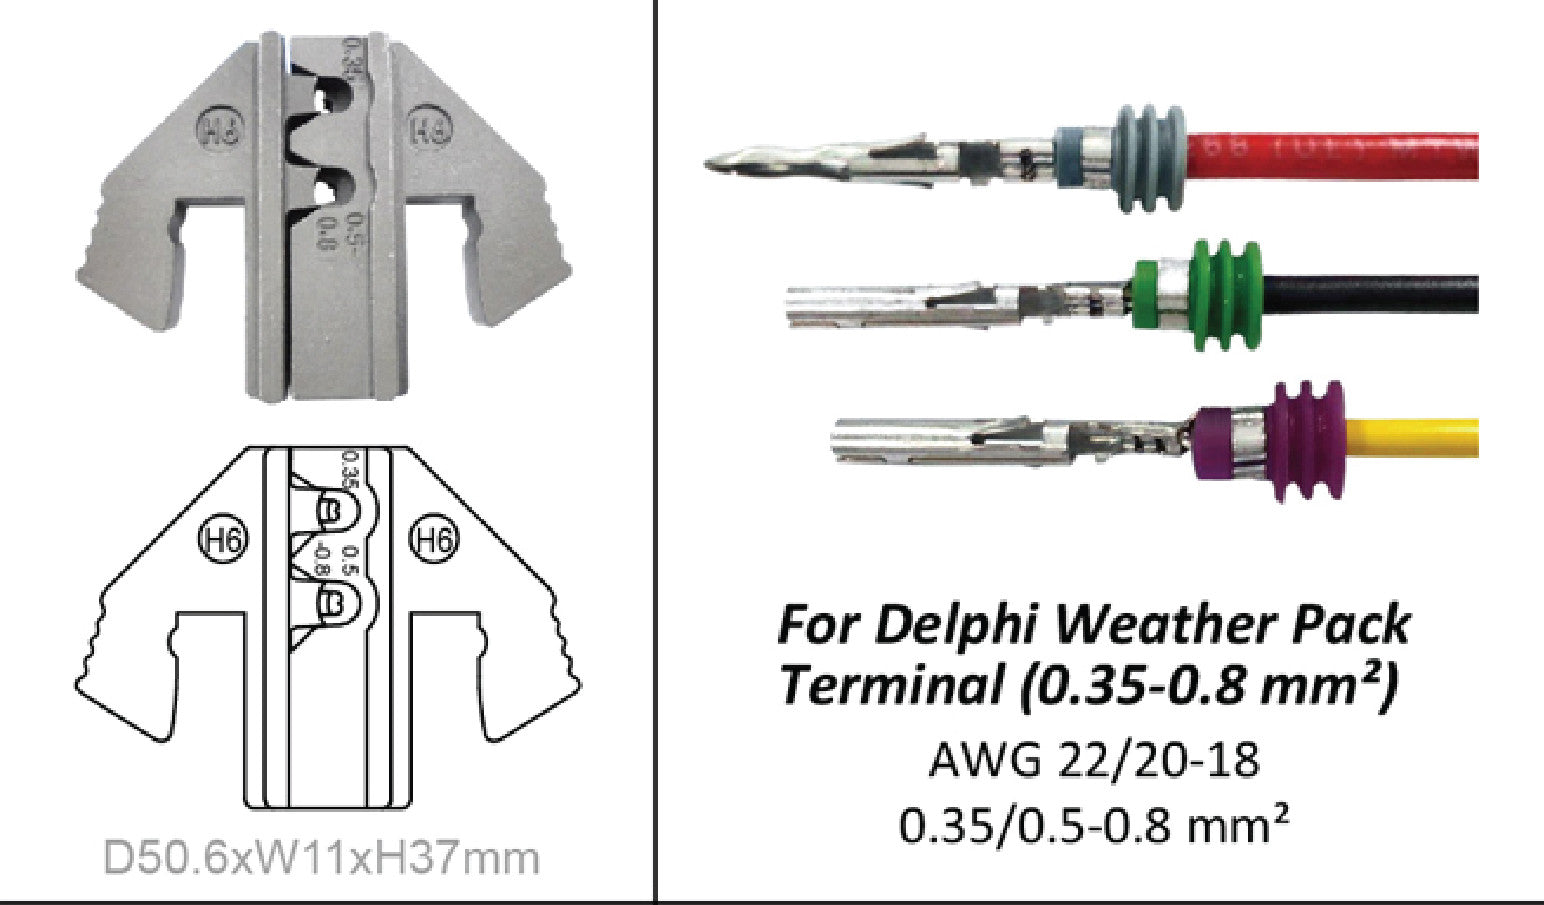 Crimping Tool Die - H6 Die for Delphi Weather Pack Terminal AWG 22/20-18